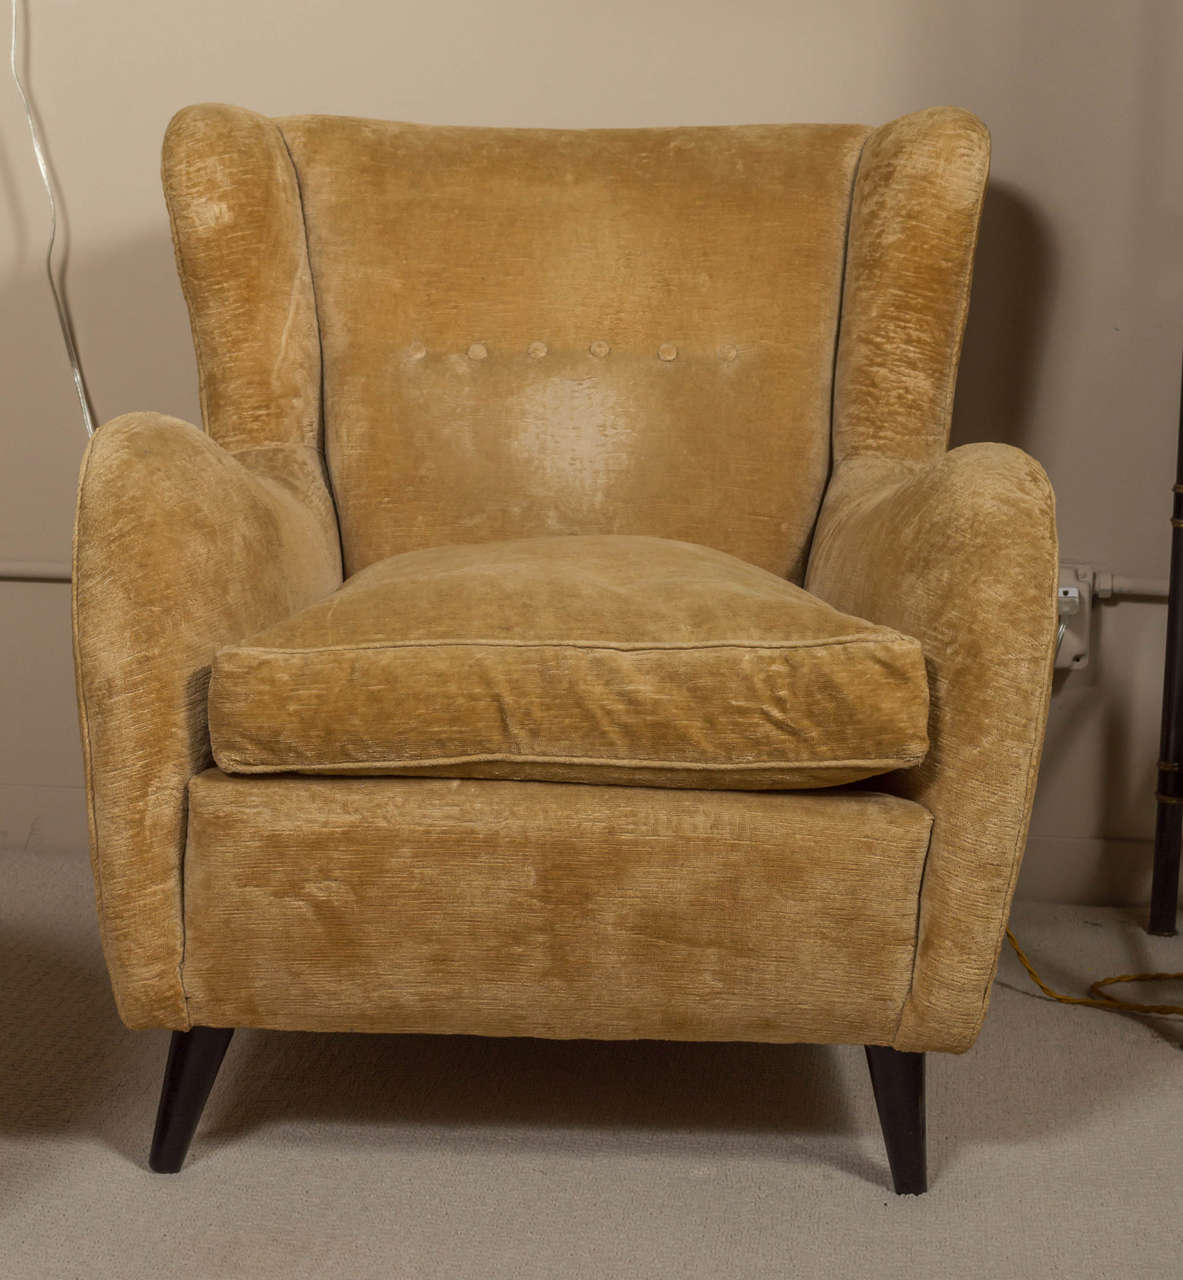 Stylish pair of Italian armchairs with ebonized wood legs and original fabric. circa 1950